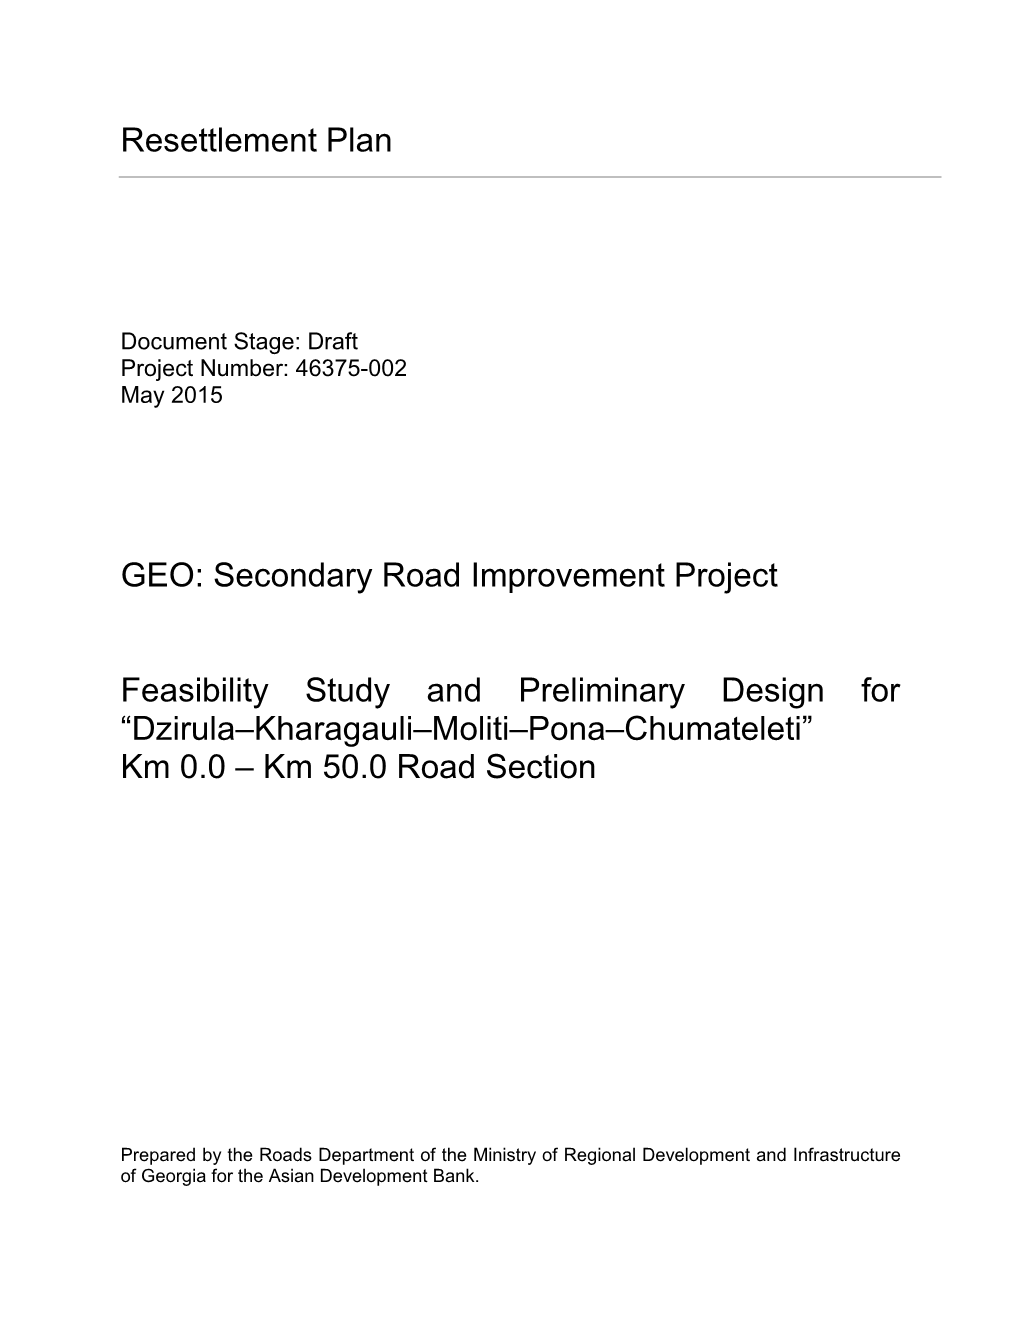 Resettlement Plan GEO: Secondary Road Improvement Project